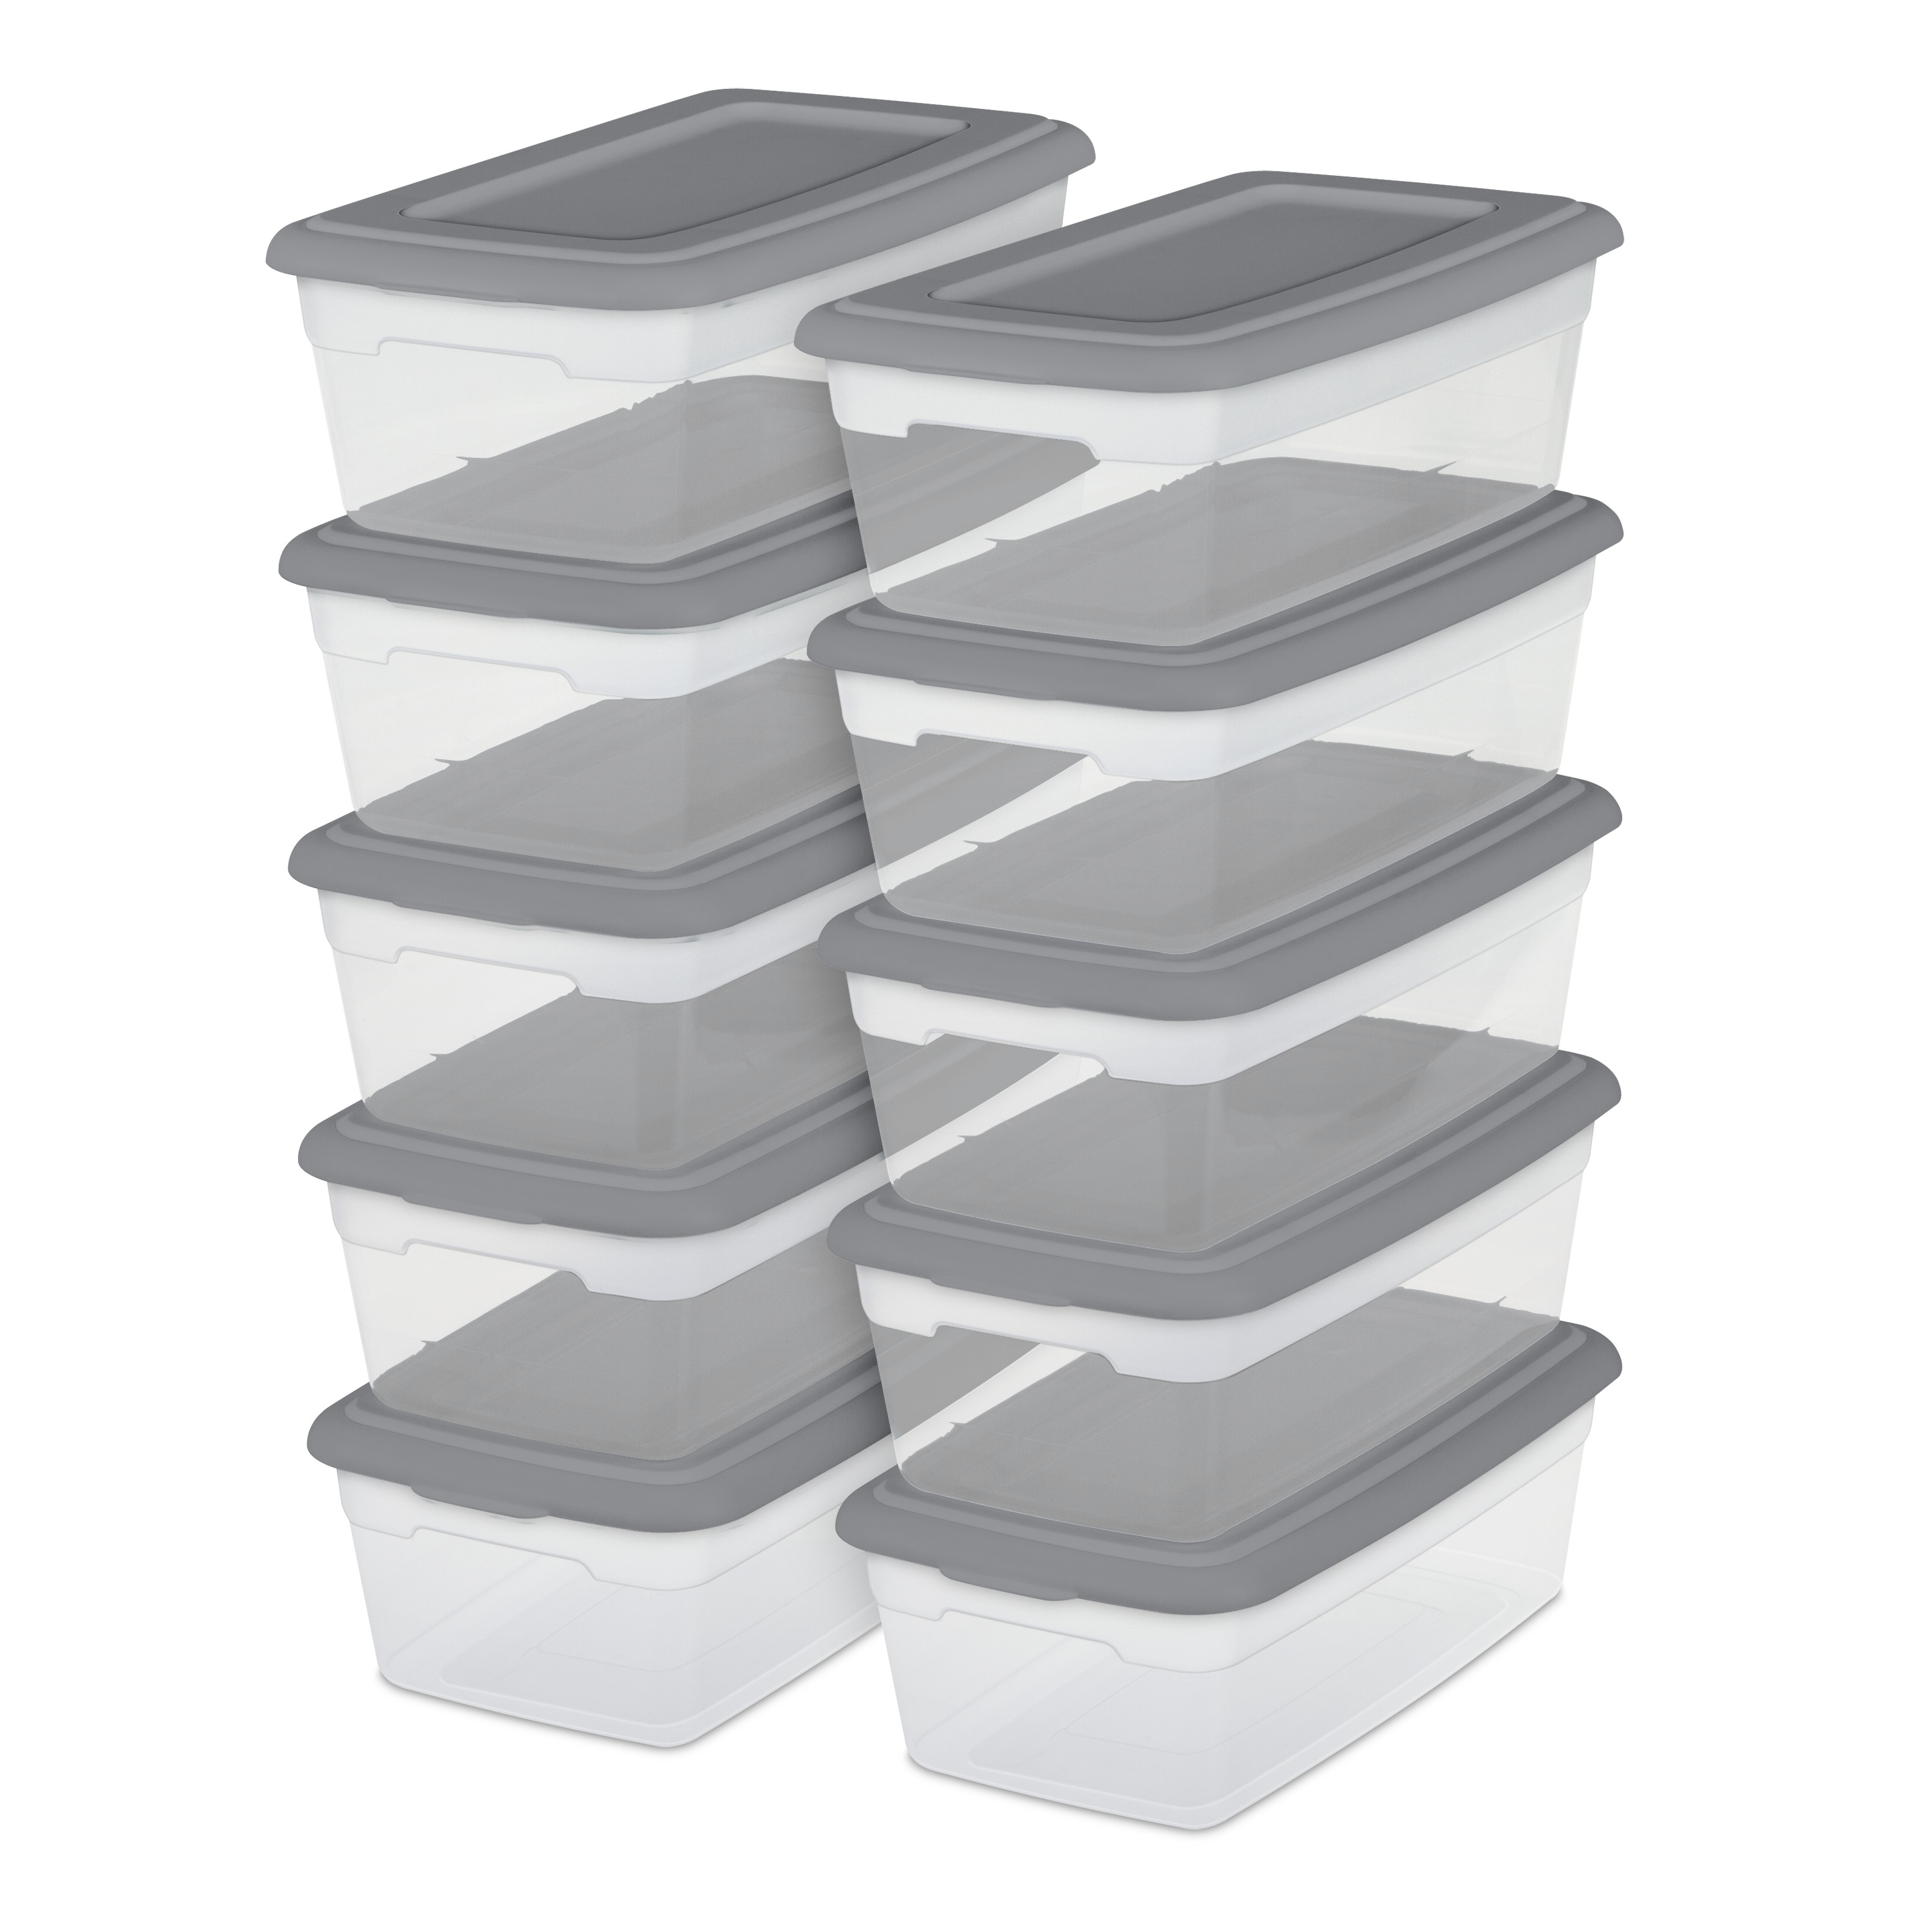 10-Pack 6-Quart Sterilite Plastic Set of Storage Boxes $11 ($1.10 each) + free store Pickup at Walmart (YMMV)